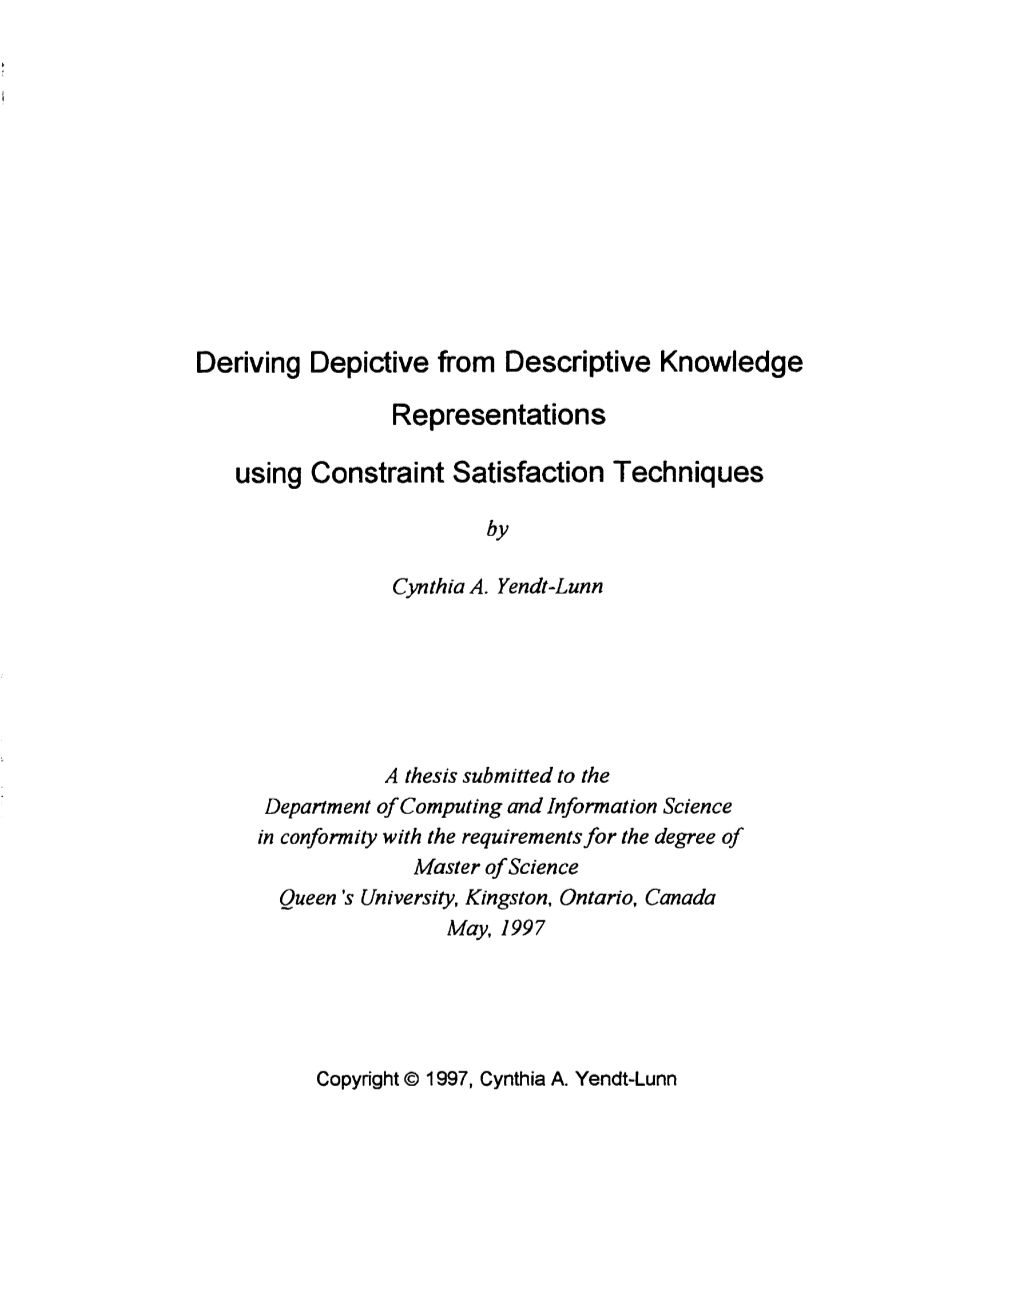 Deriving Depictive from Descriptive Knowledge Representations Using Constraint Satisfaction Techniques